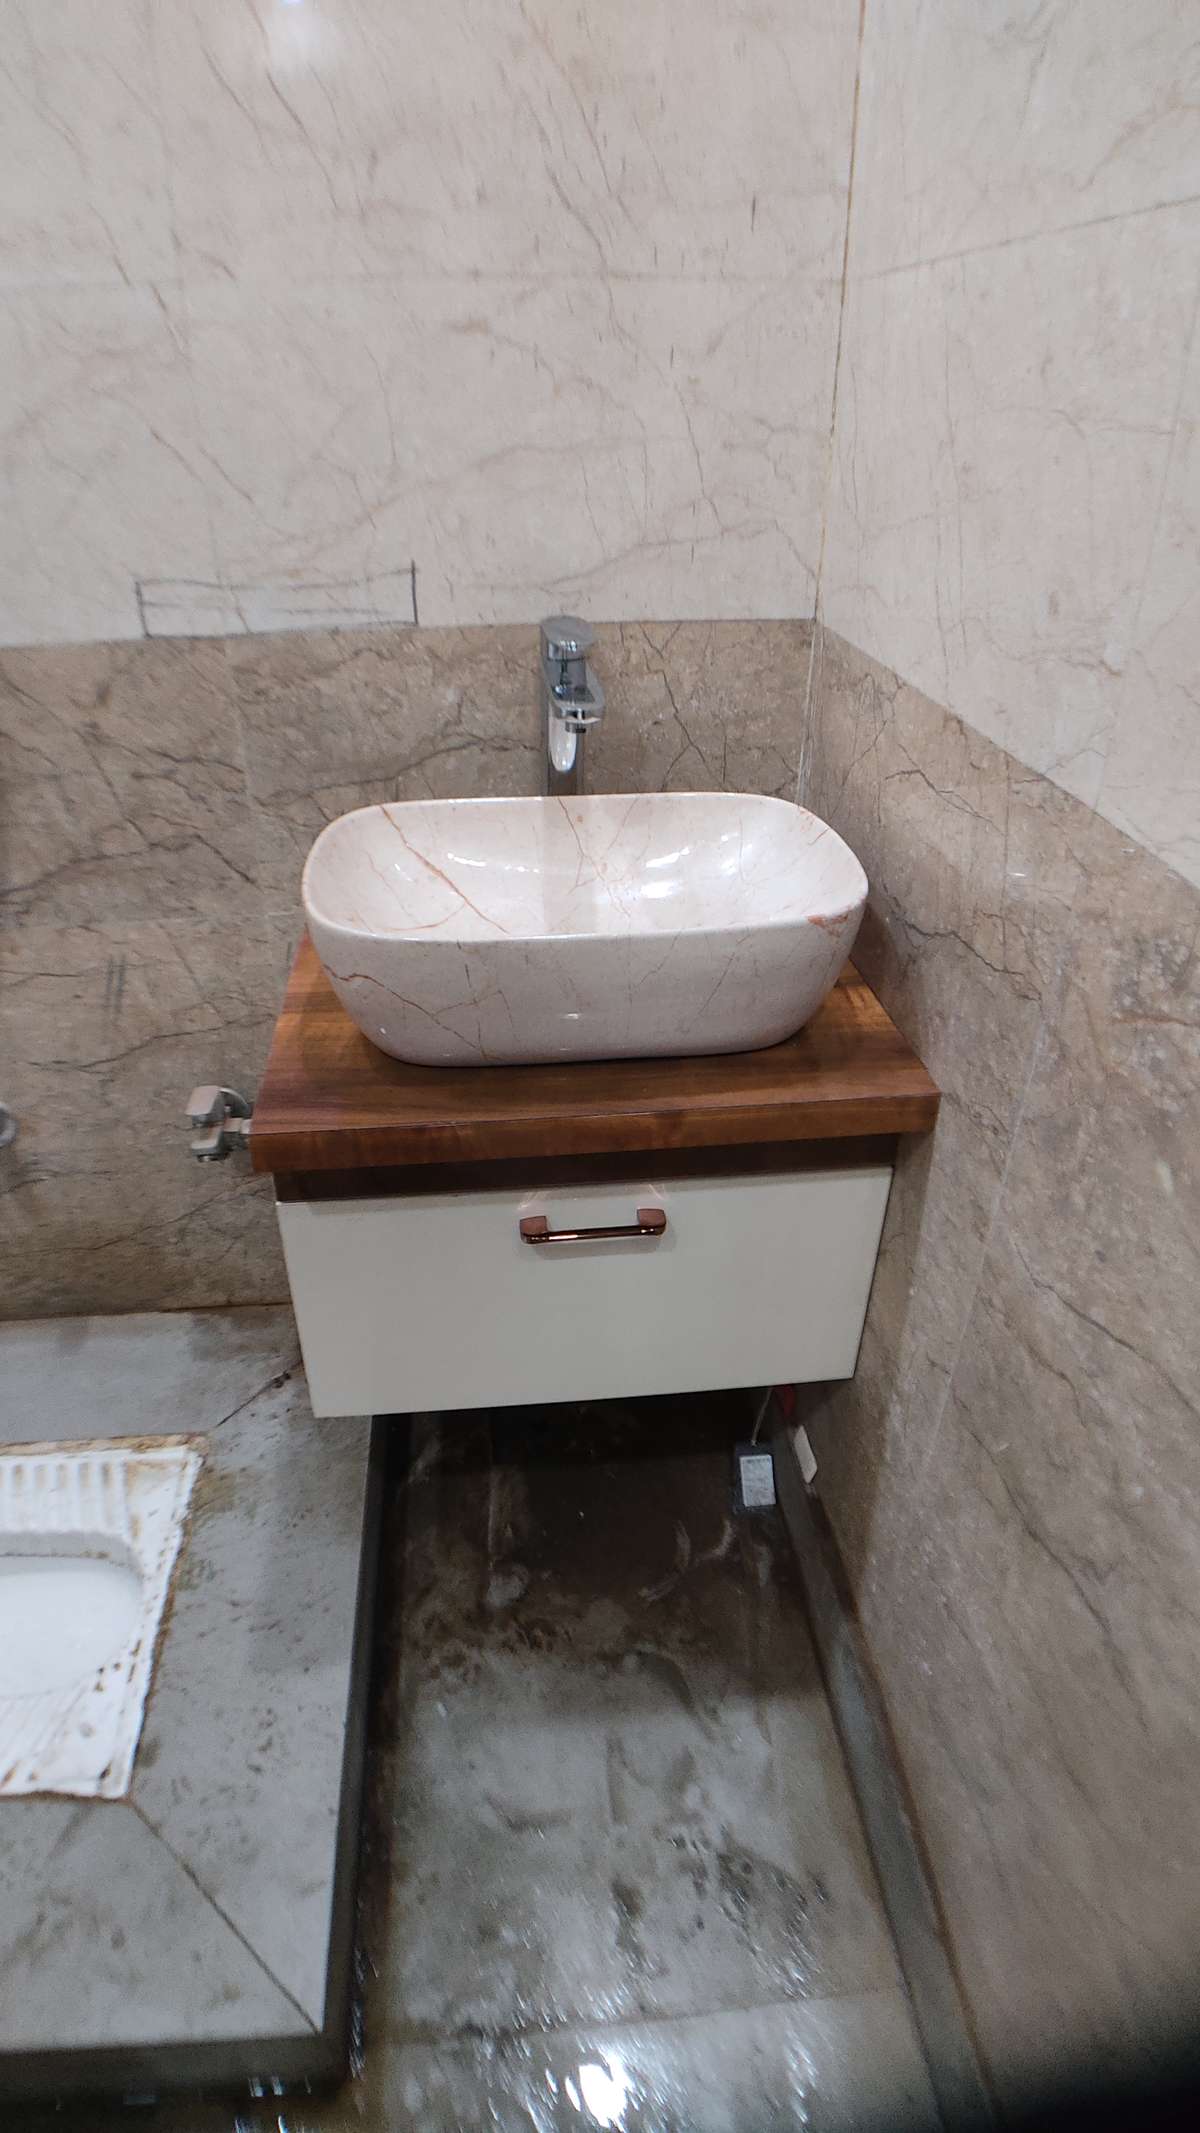 another bathroom vanity design
#BathroomStorage 
#BathroomCabinet 
#BathroomRenovatio 
#bathroomdecor 
#bathroomvanity 